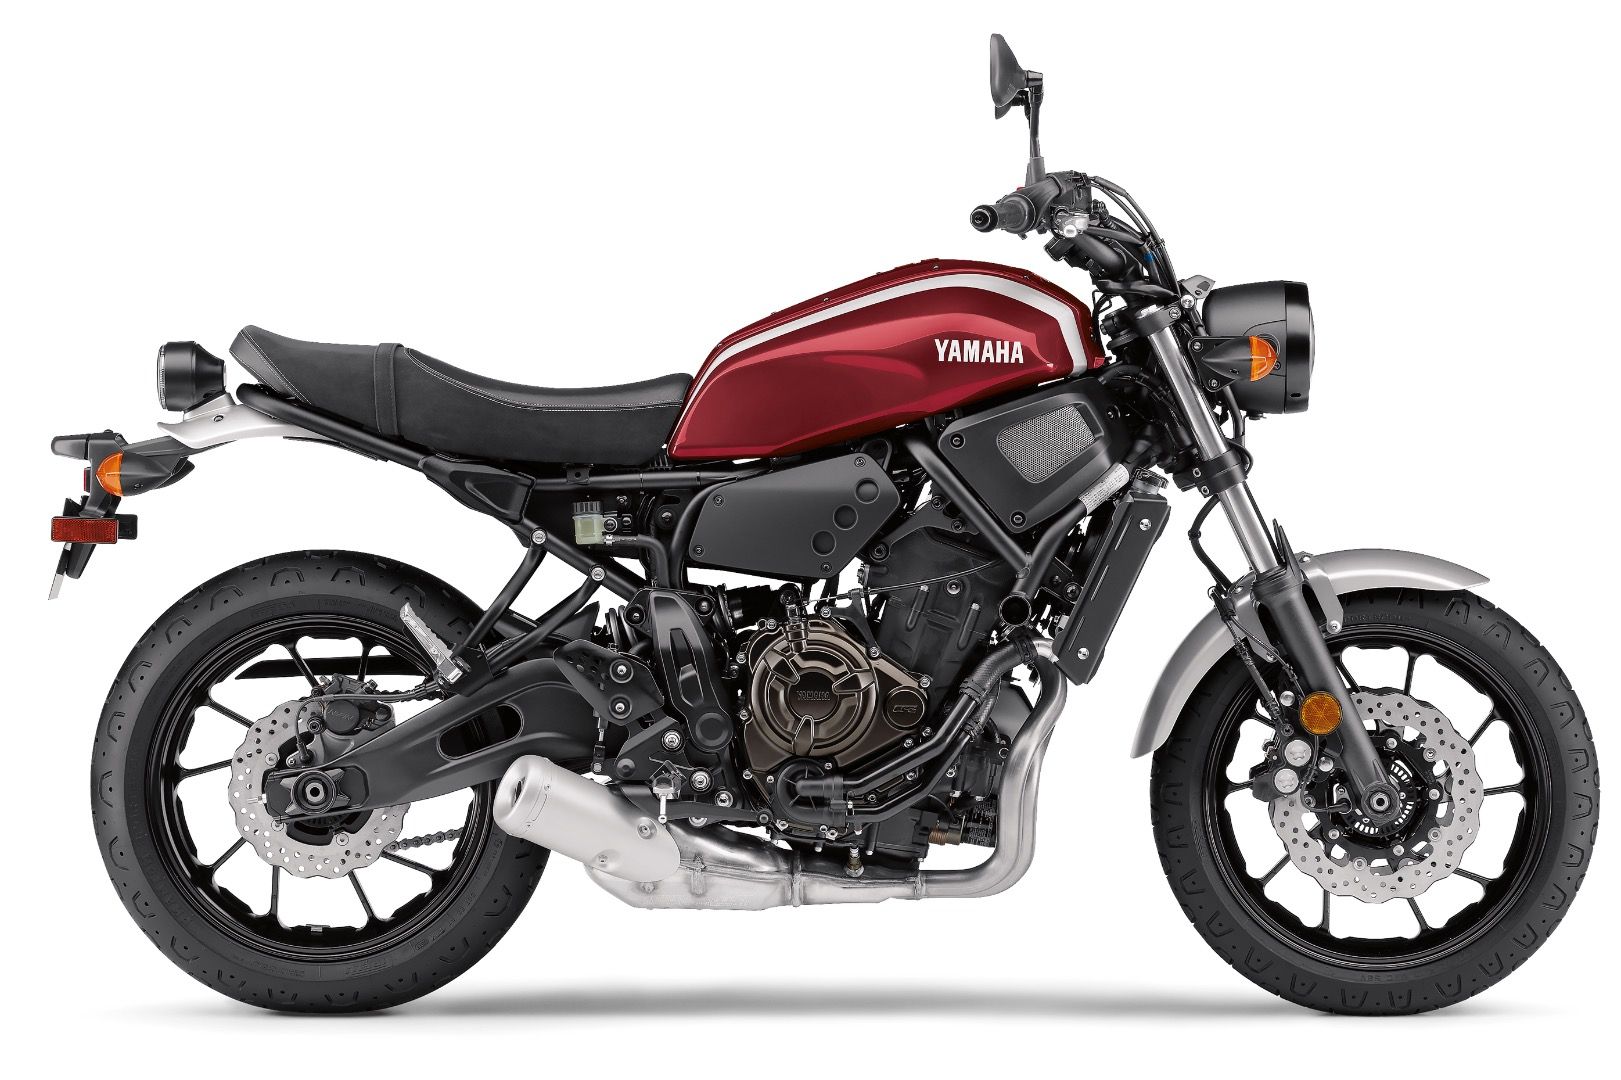 2018-Yamaha-XSR700-First-Look-Retro-Motorcycle-2.jpg